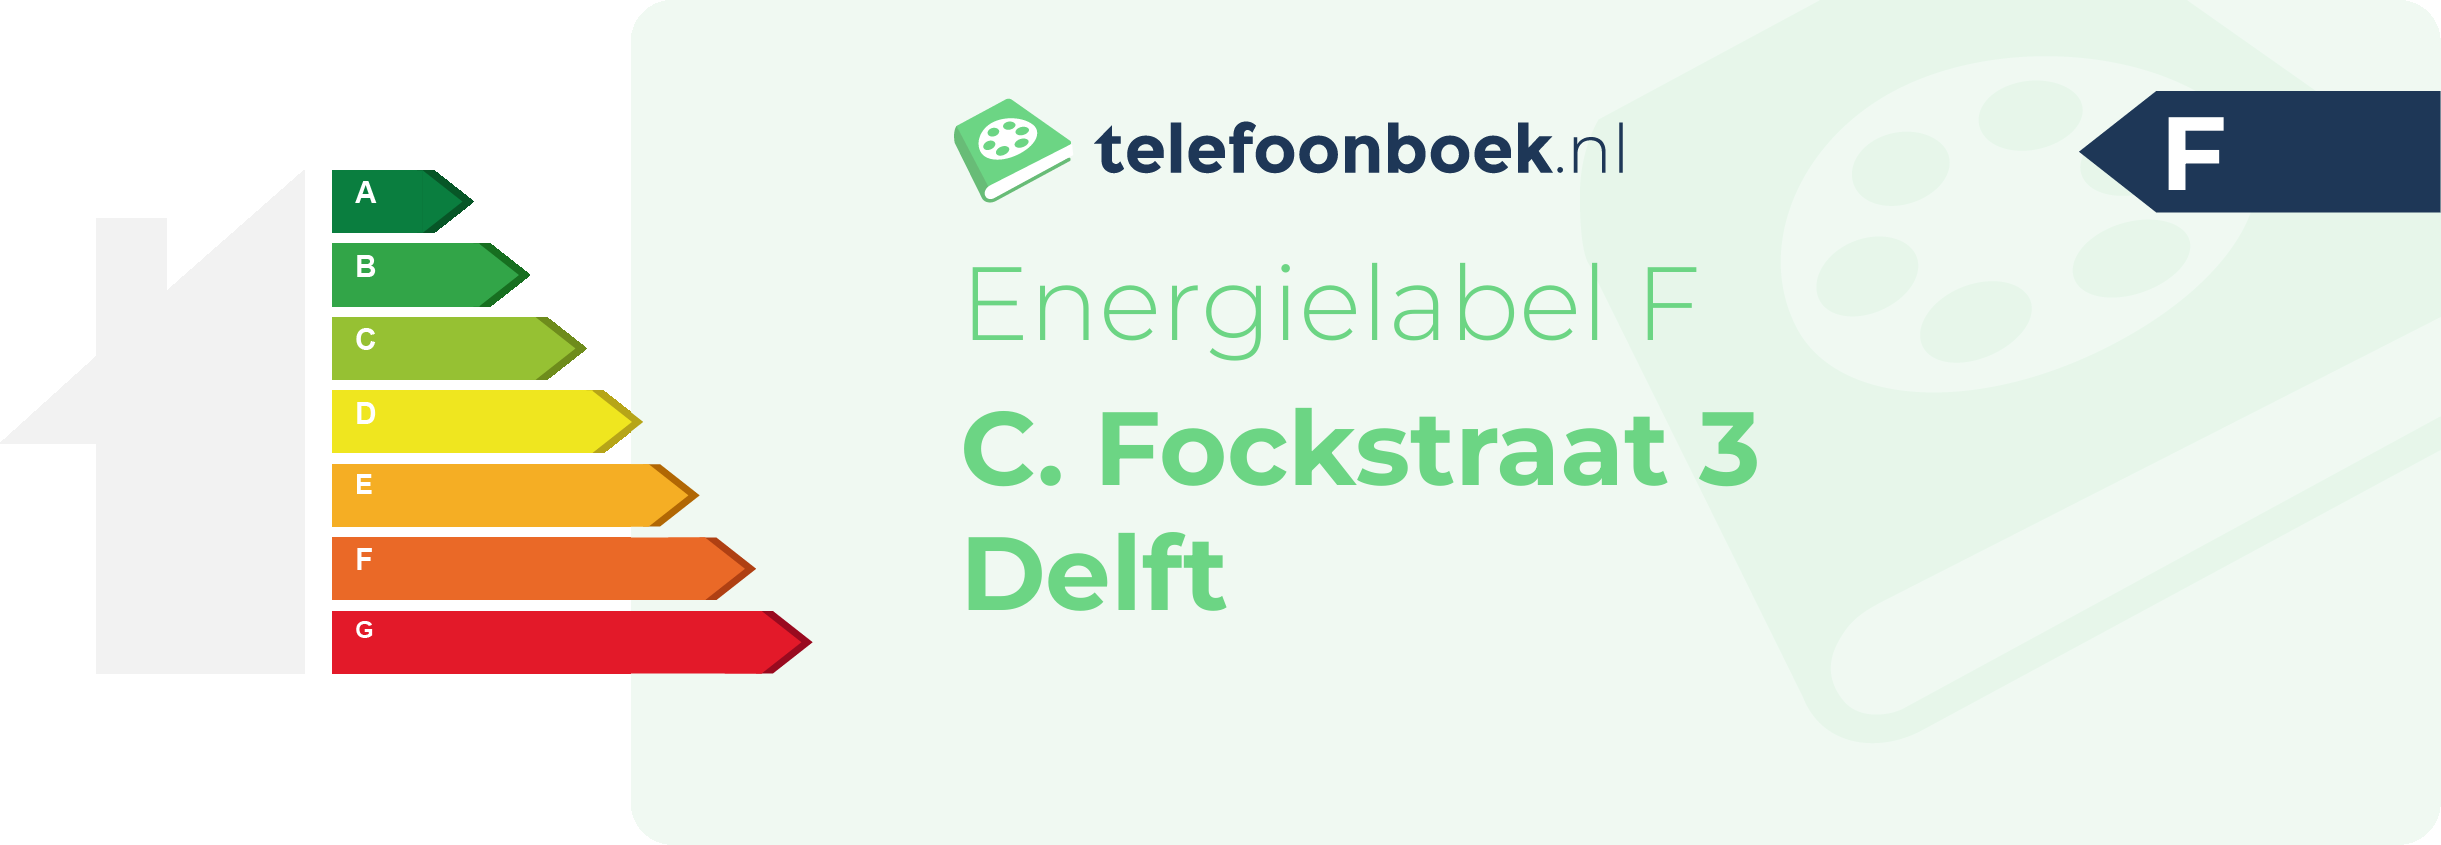 Energielabel C. Fockstraat 3 Delft